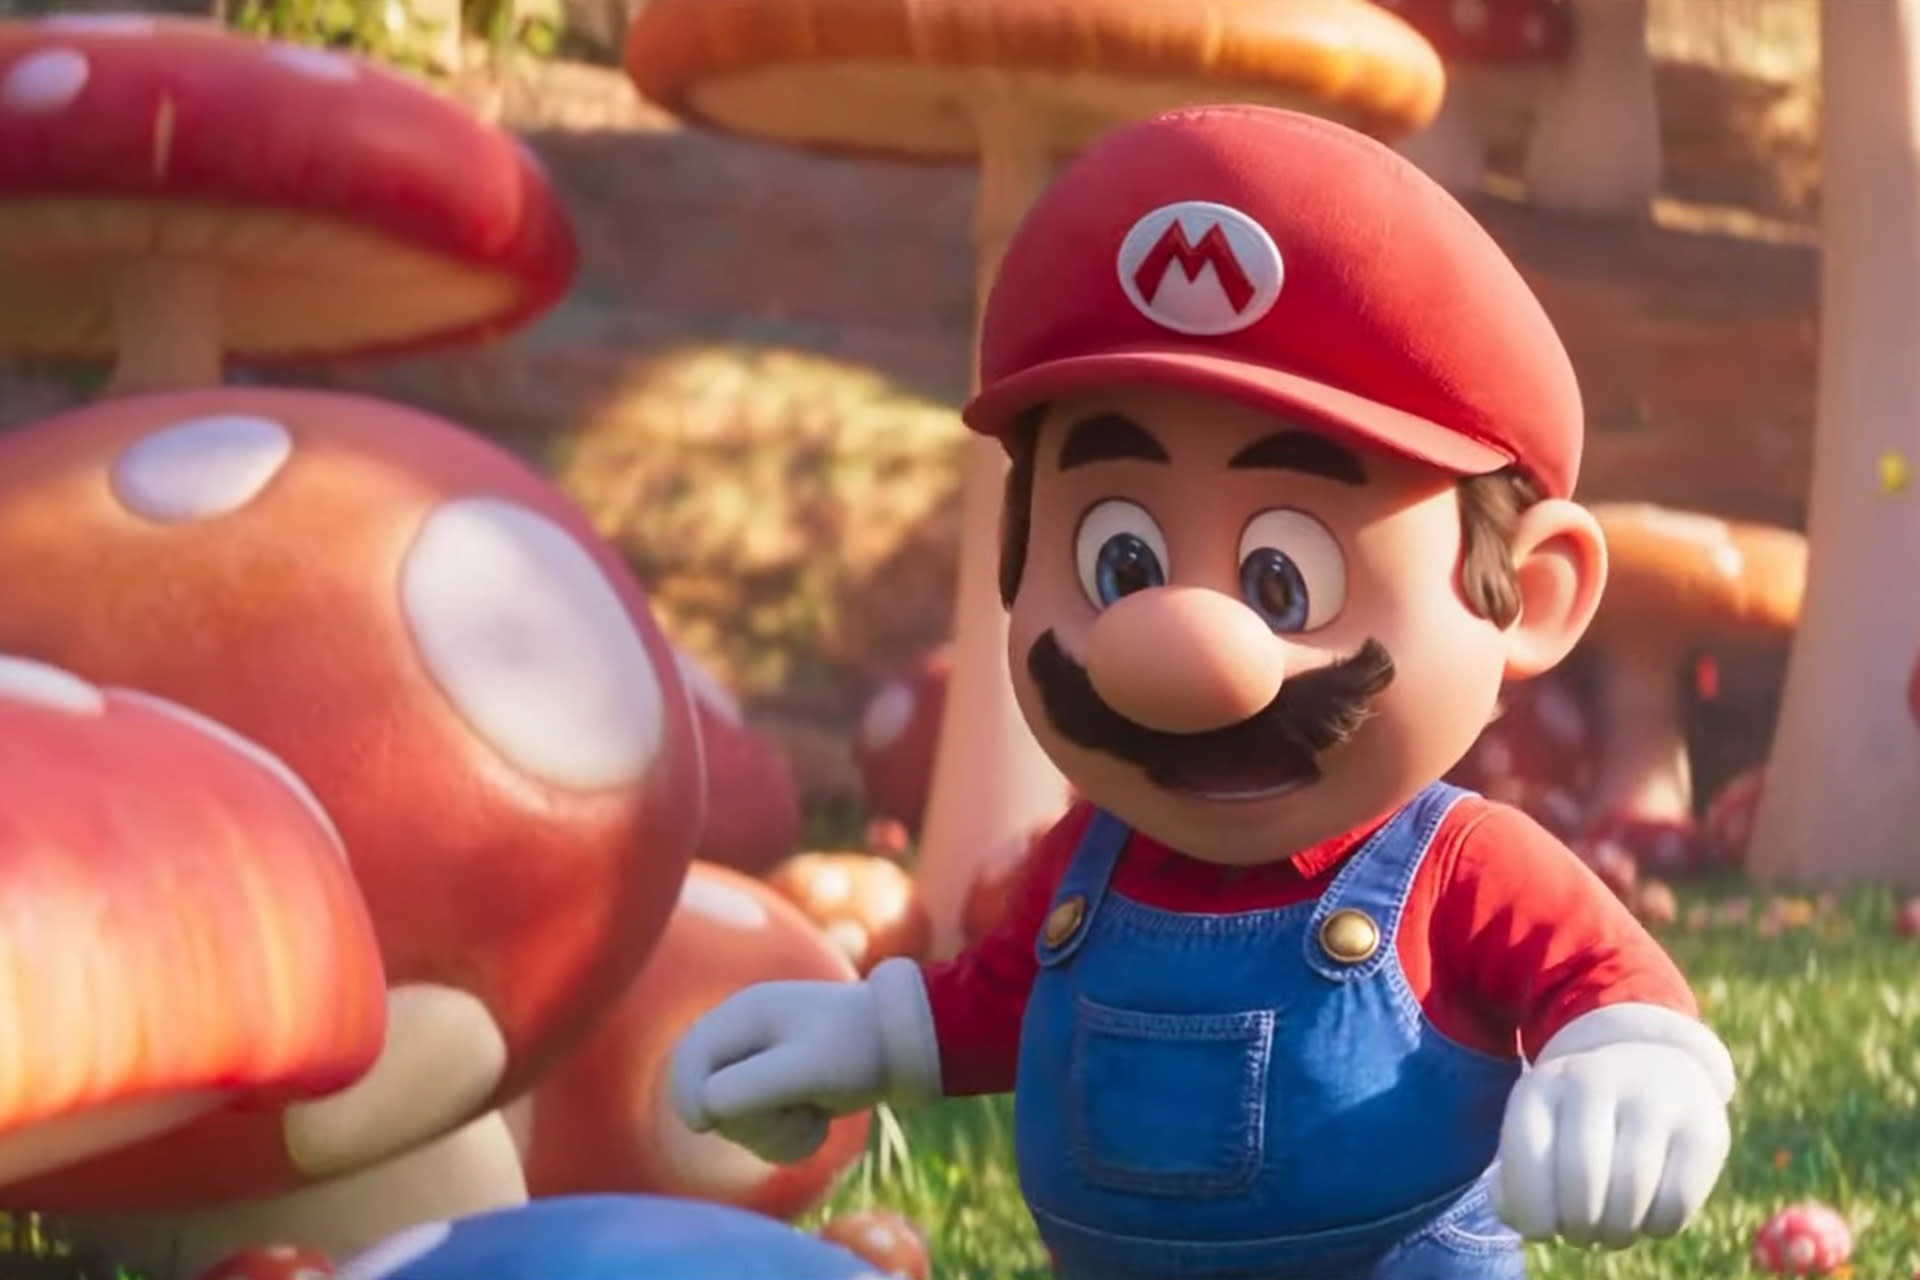 Charles Martinet & Shigeru Miyamoto share video message after Mario voice  announcement - Vooks